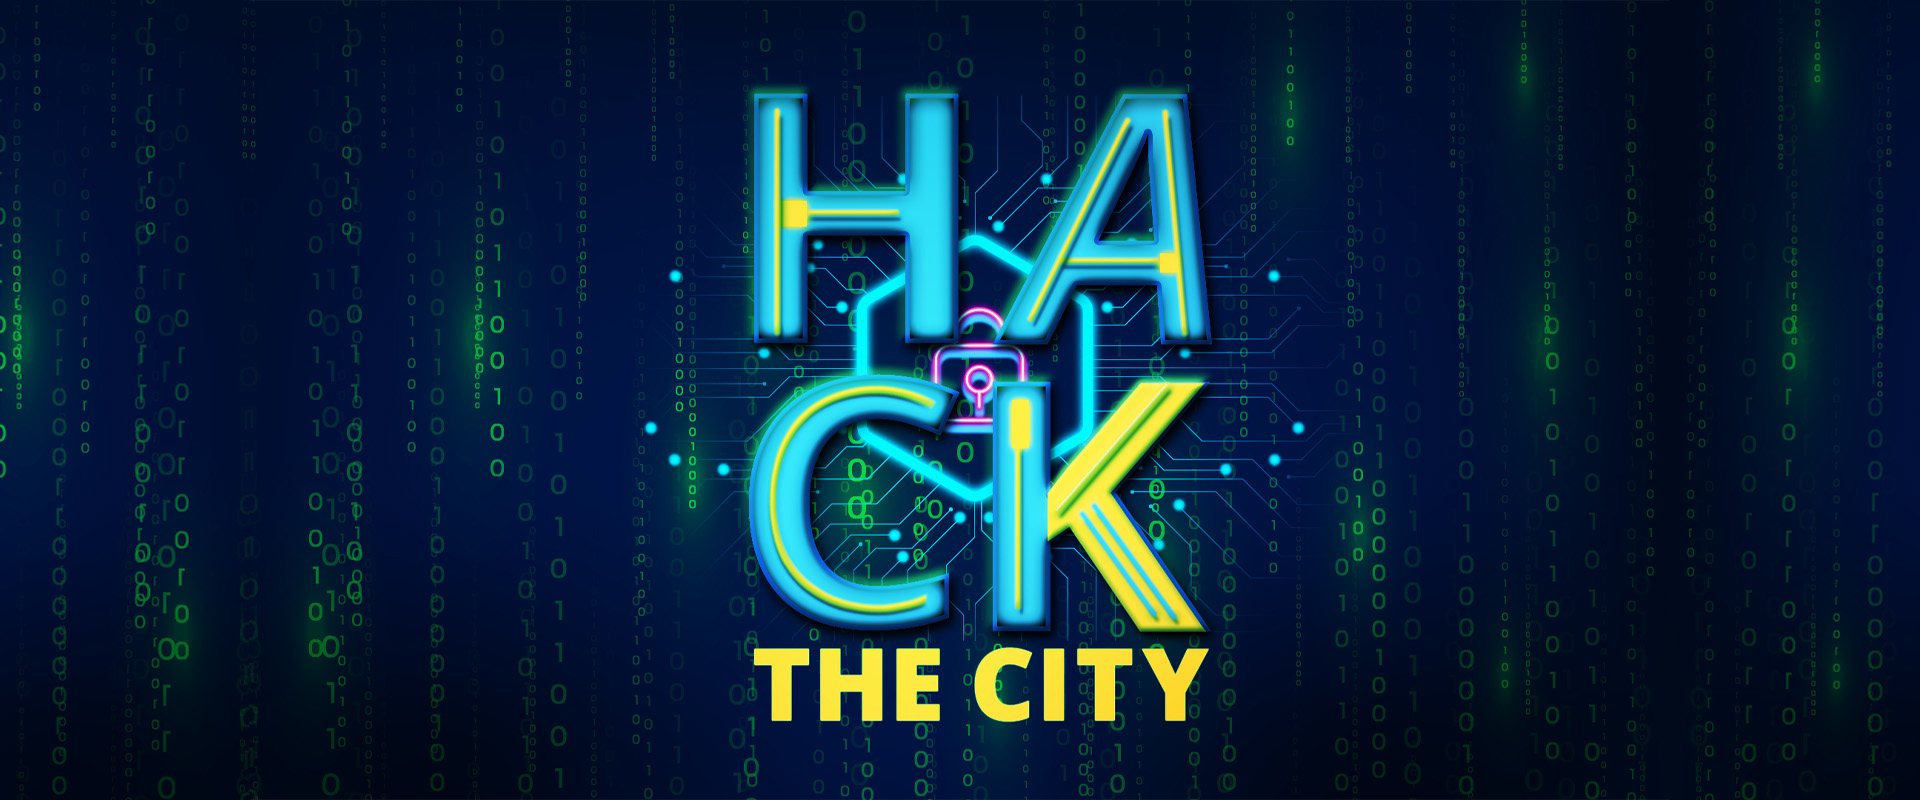 Hack-The-City_website-banner-1.jpg